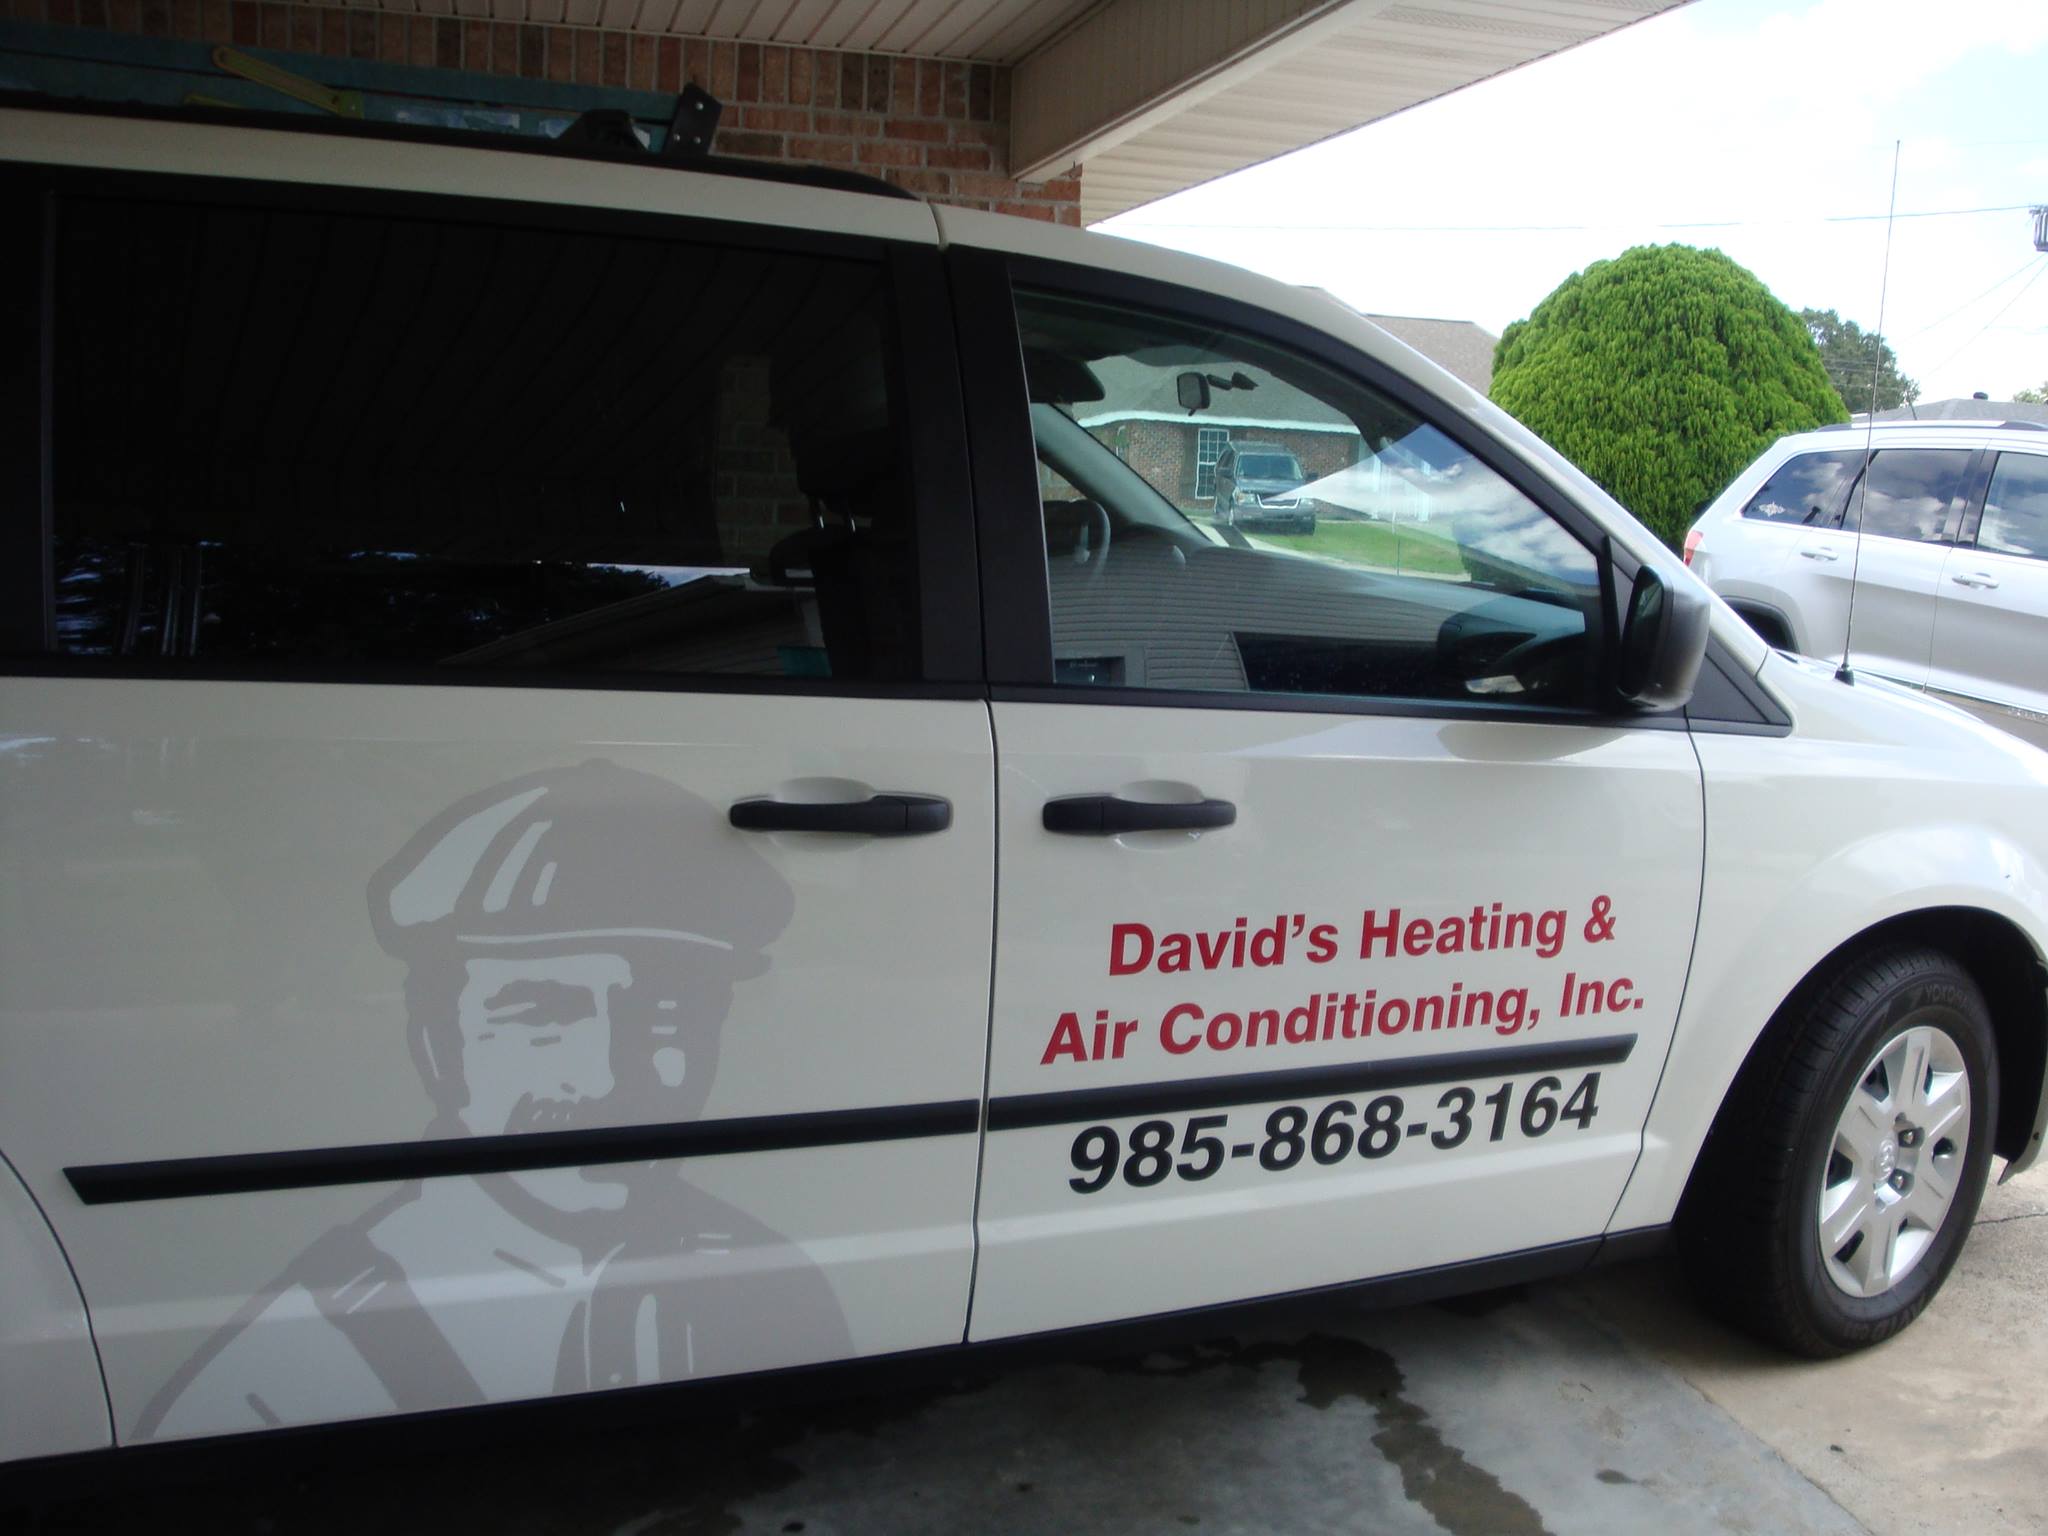 David's Heating & Air Conditioning Inc